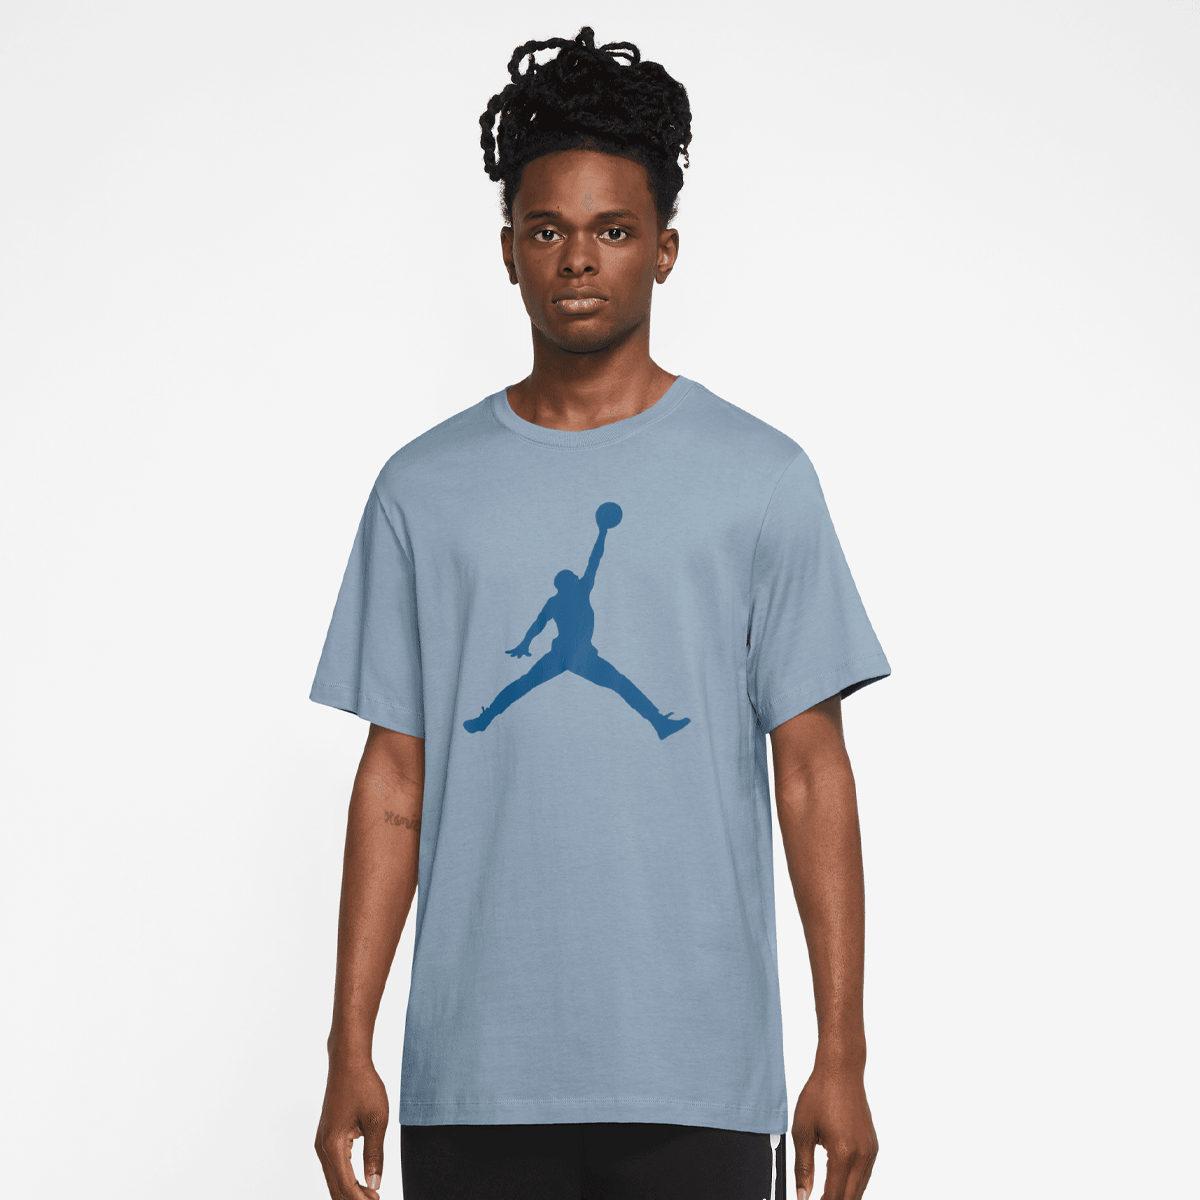 Jumpman Shortsleeve Crew Shirt, JORDAN, Apparel, blue grey/industrial blue, taille: S